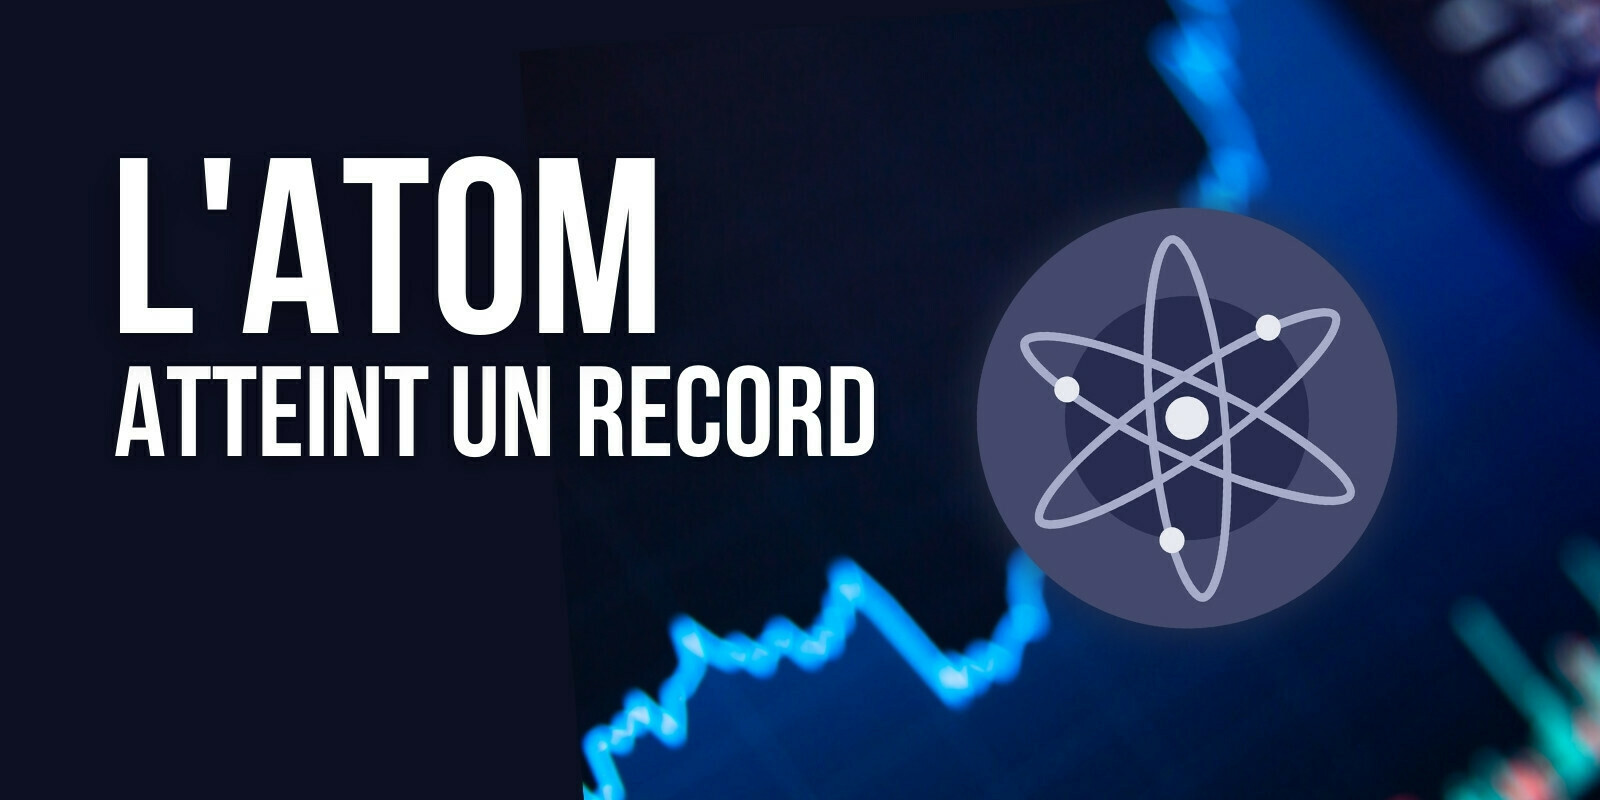 Les altcoins chutent, mais Cosmos (ATOM) atteint un record absolu